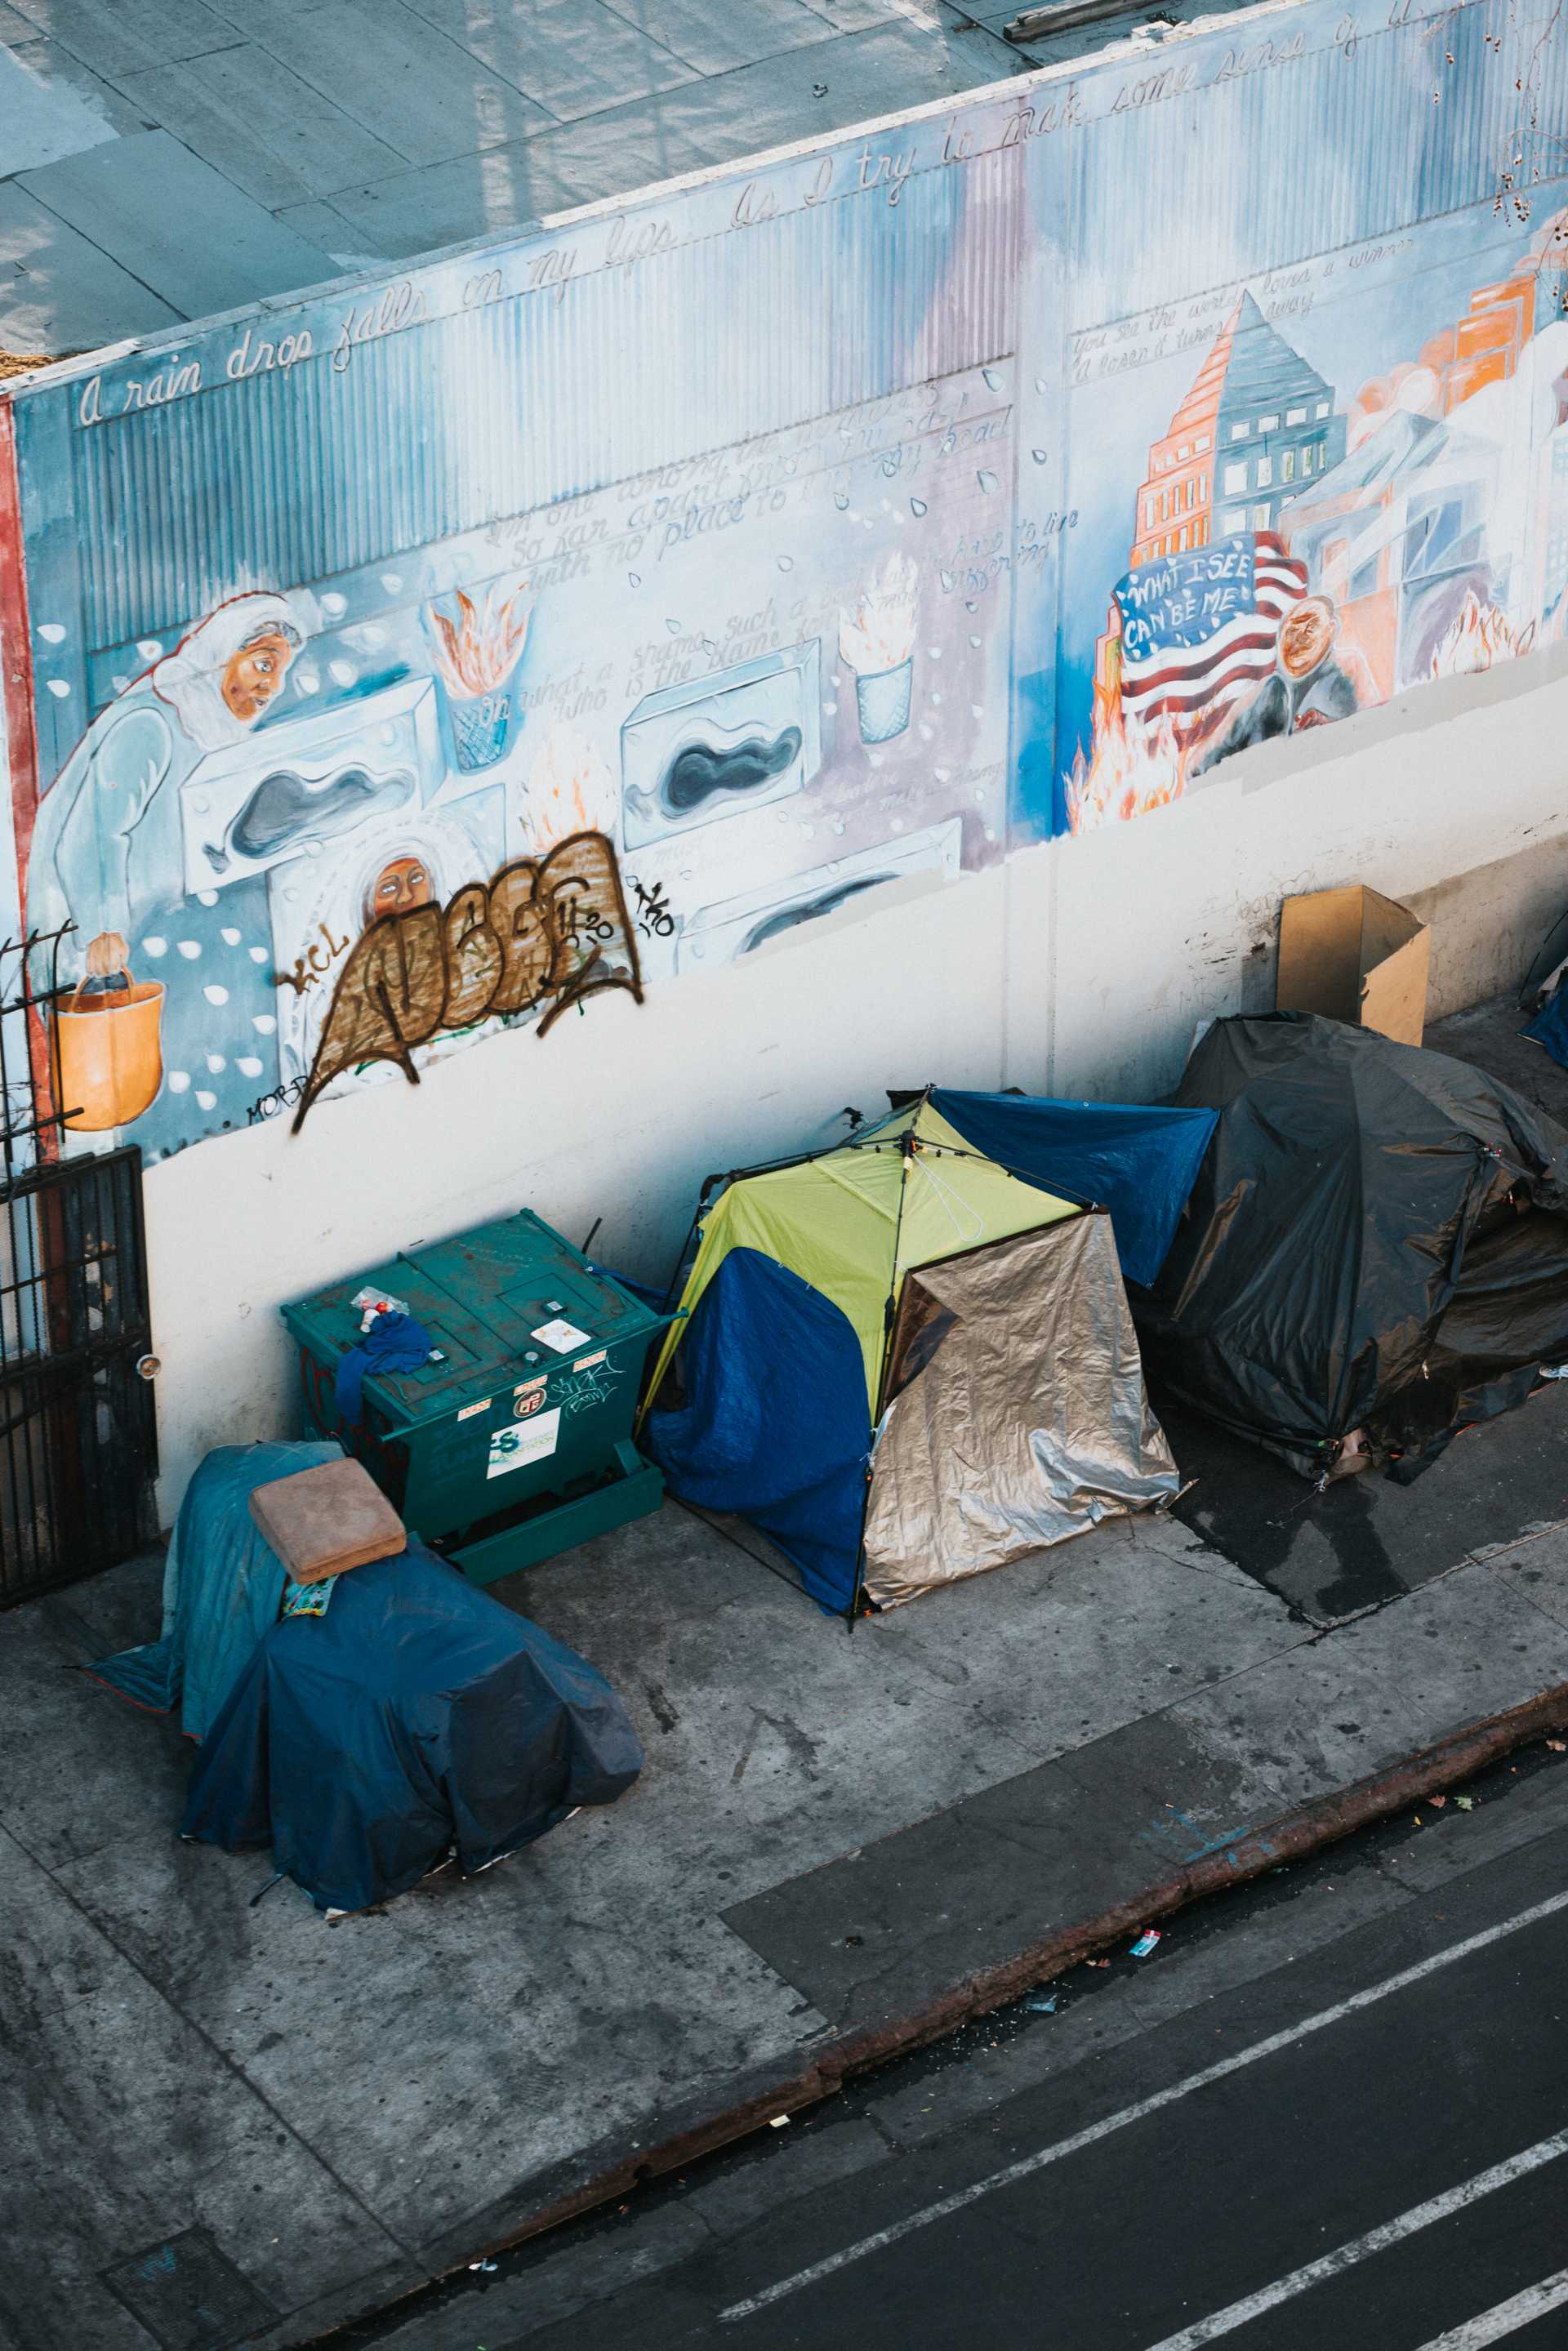 A homeless encampment of tents on a sidewalk.